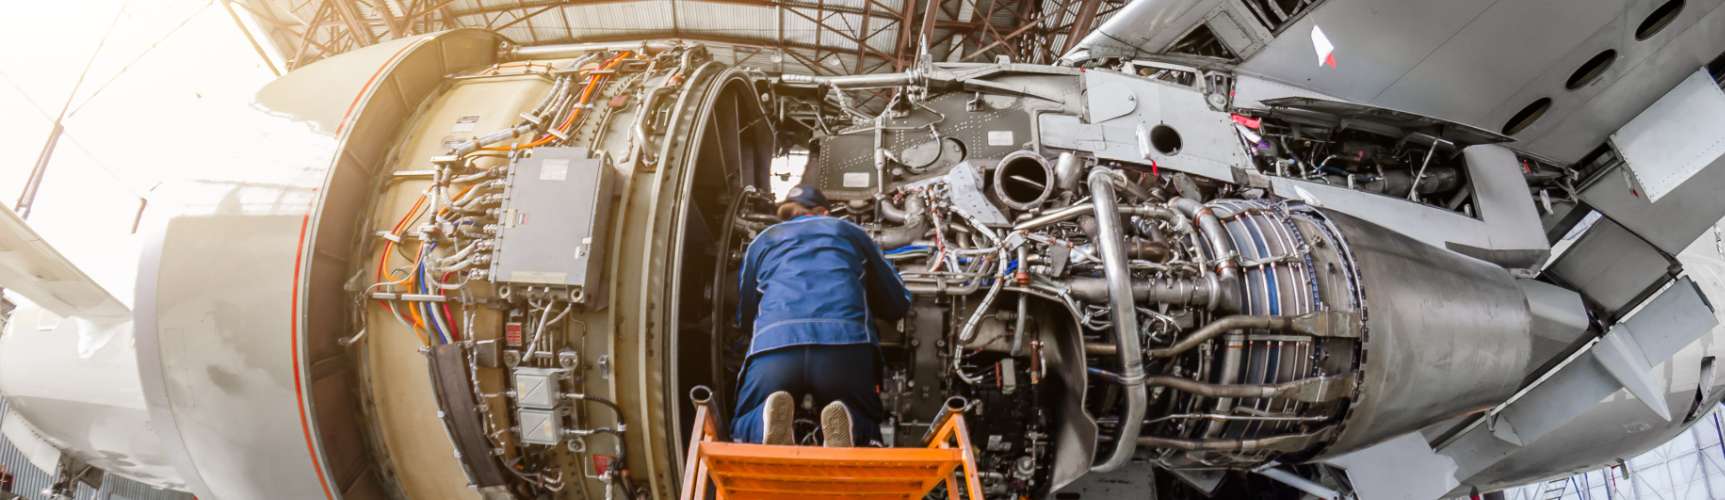 Aero engine-Maintenance Manual for LPT and TEC